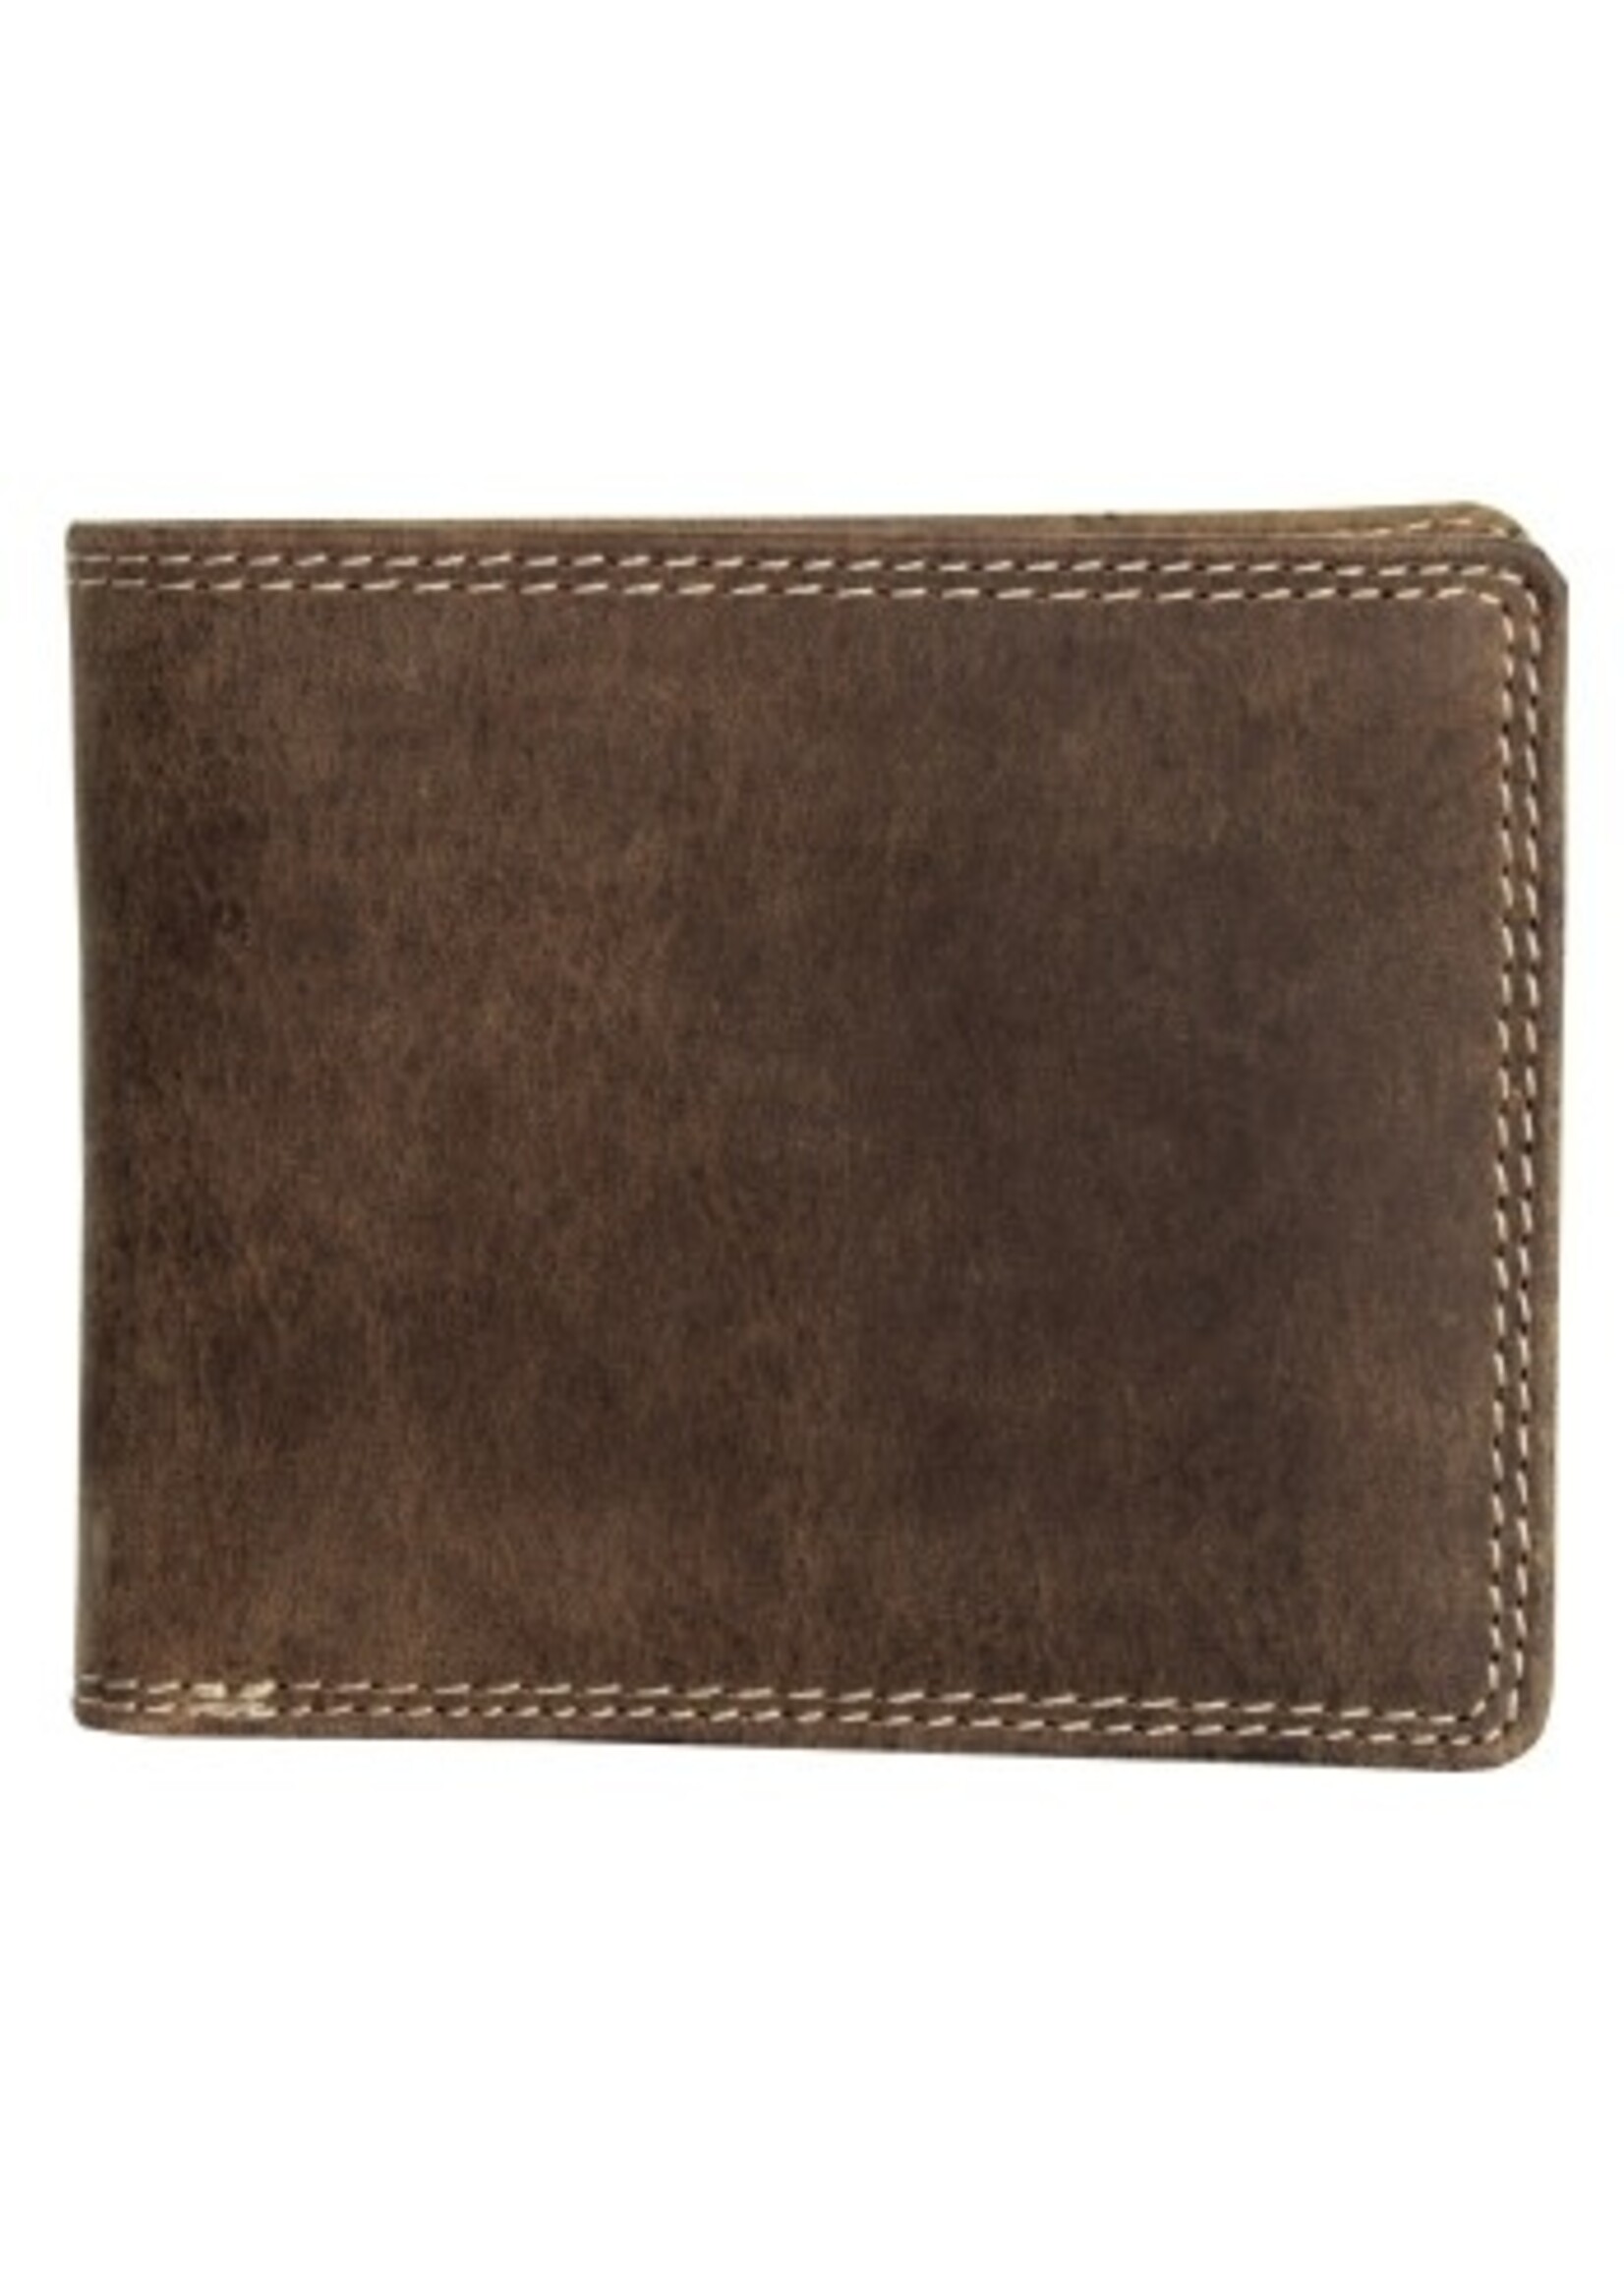 Adrian Klis Men's wallet with change compartment